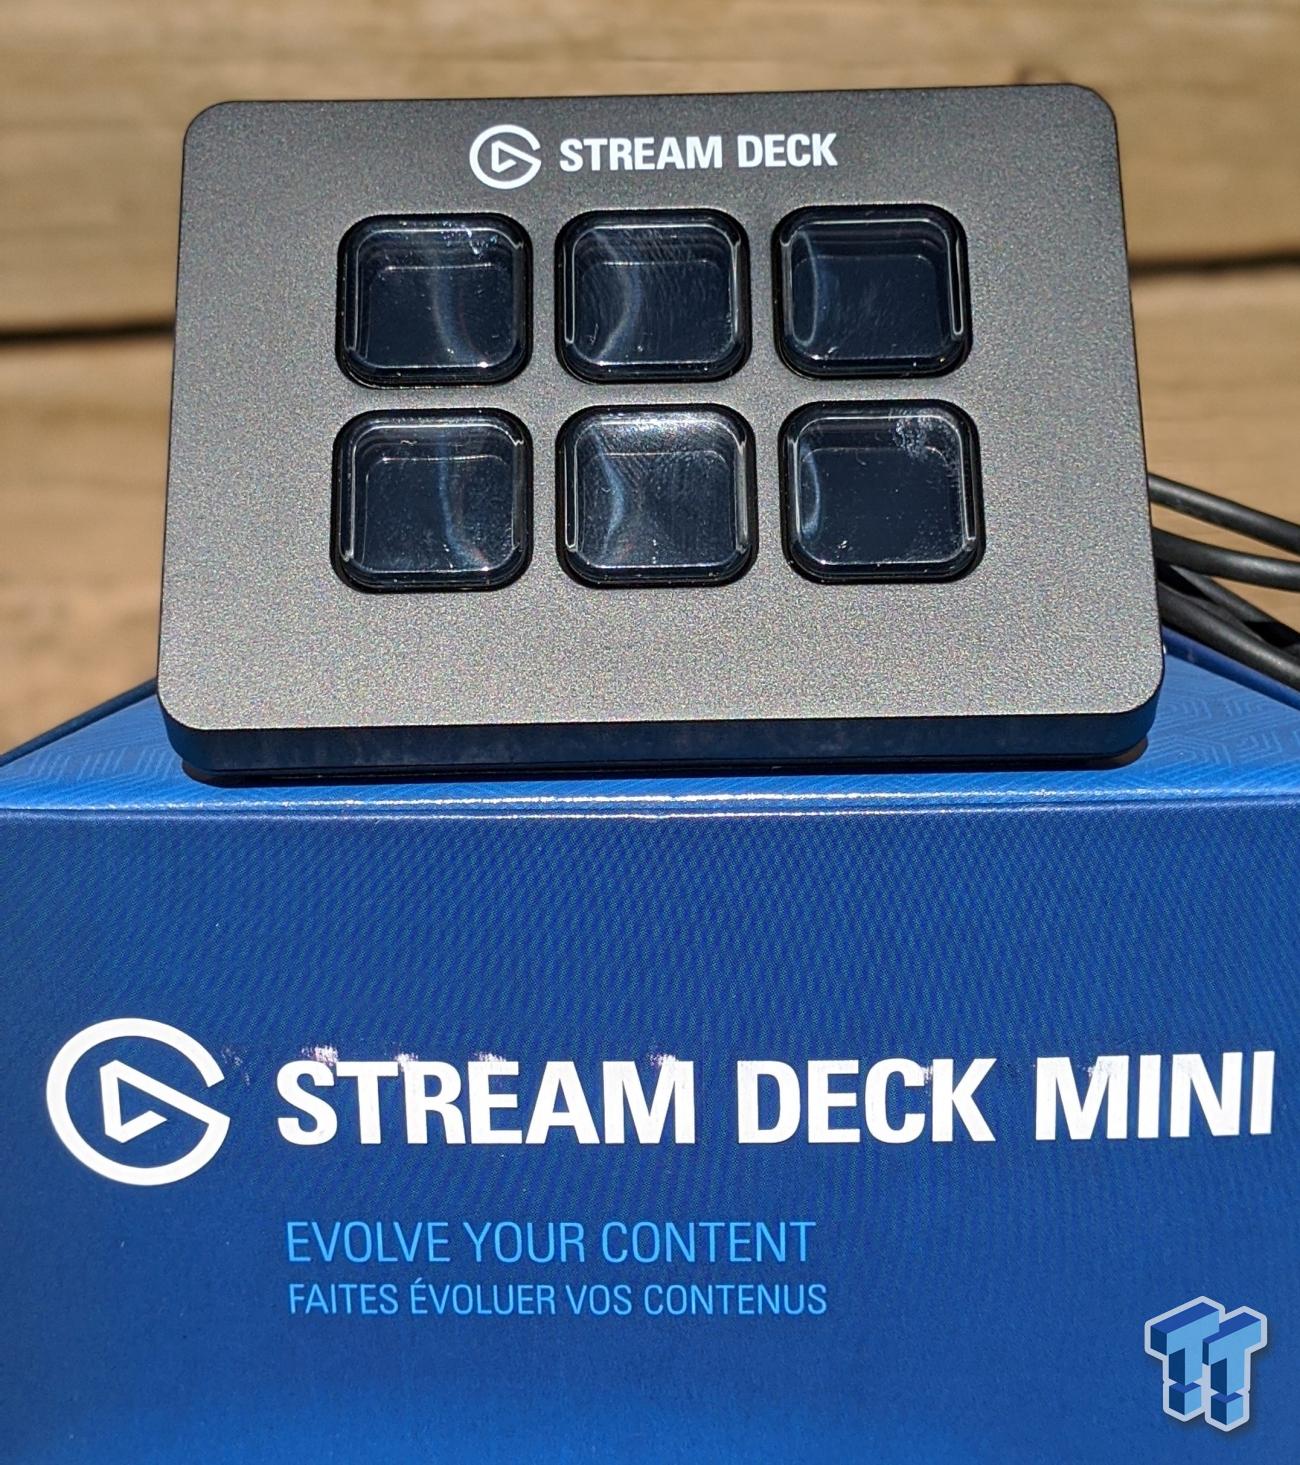 Elgato Stream Deck Mini Review - Introduction